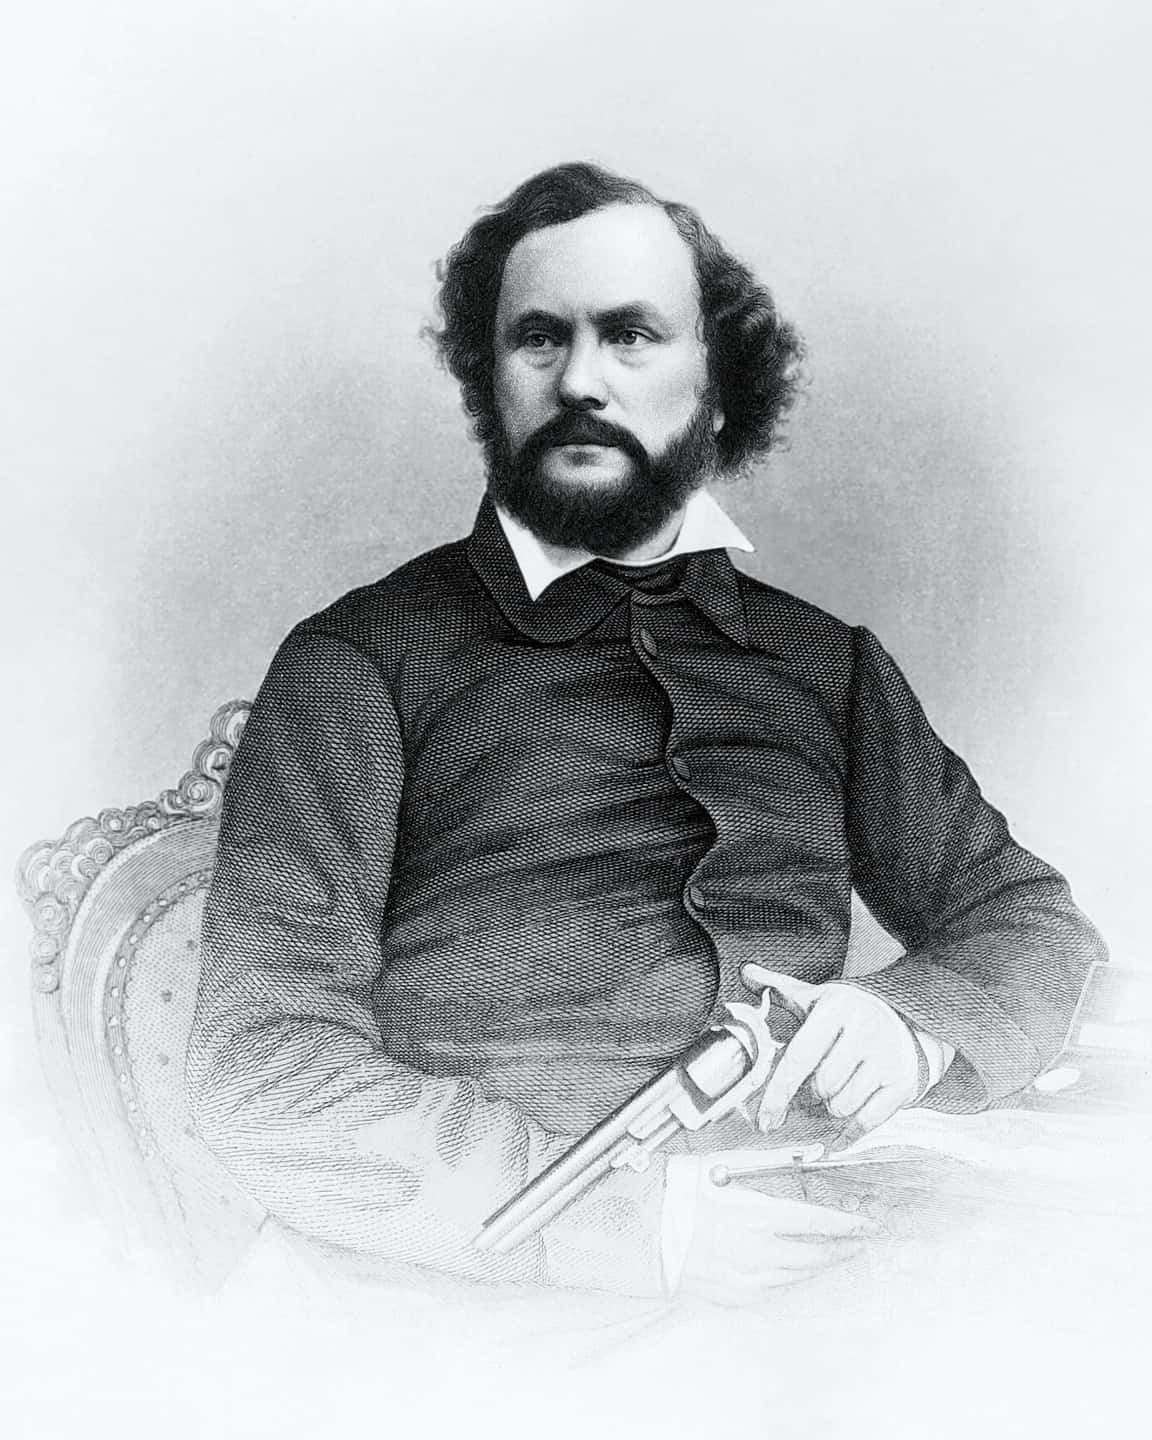 Samuel Colt, founder of the Colt Manufacturing Co.